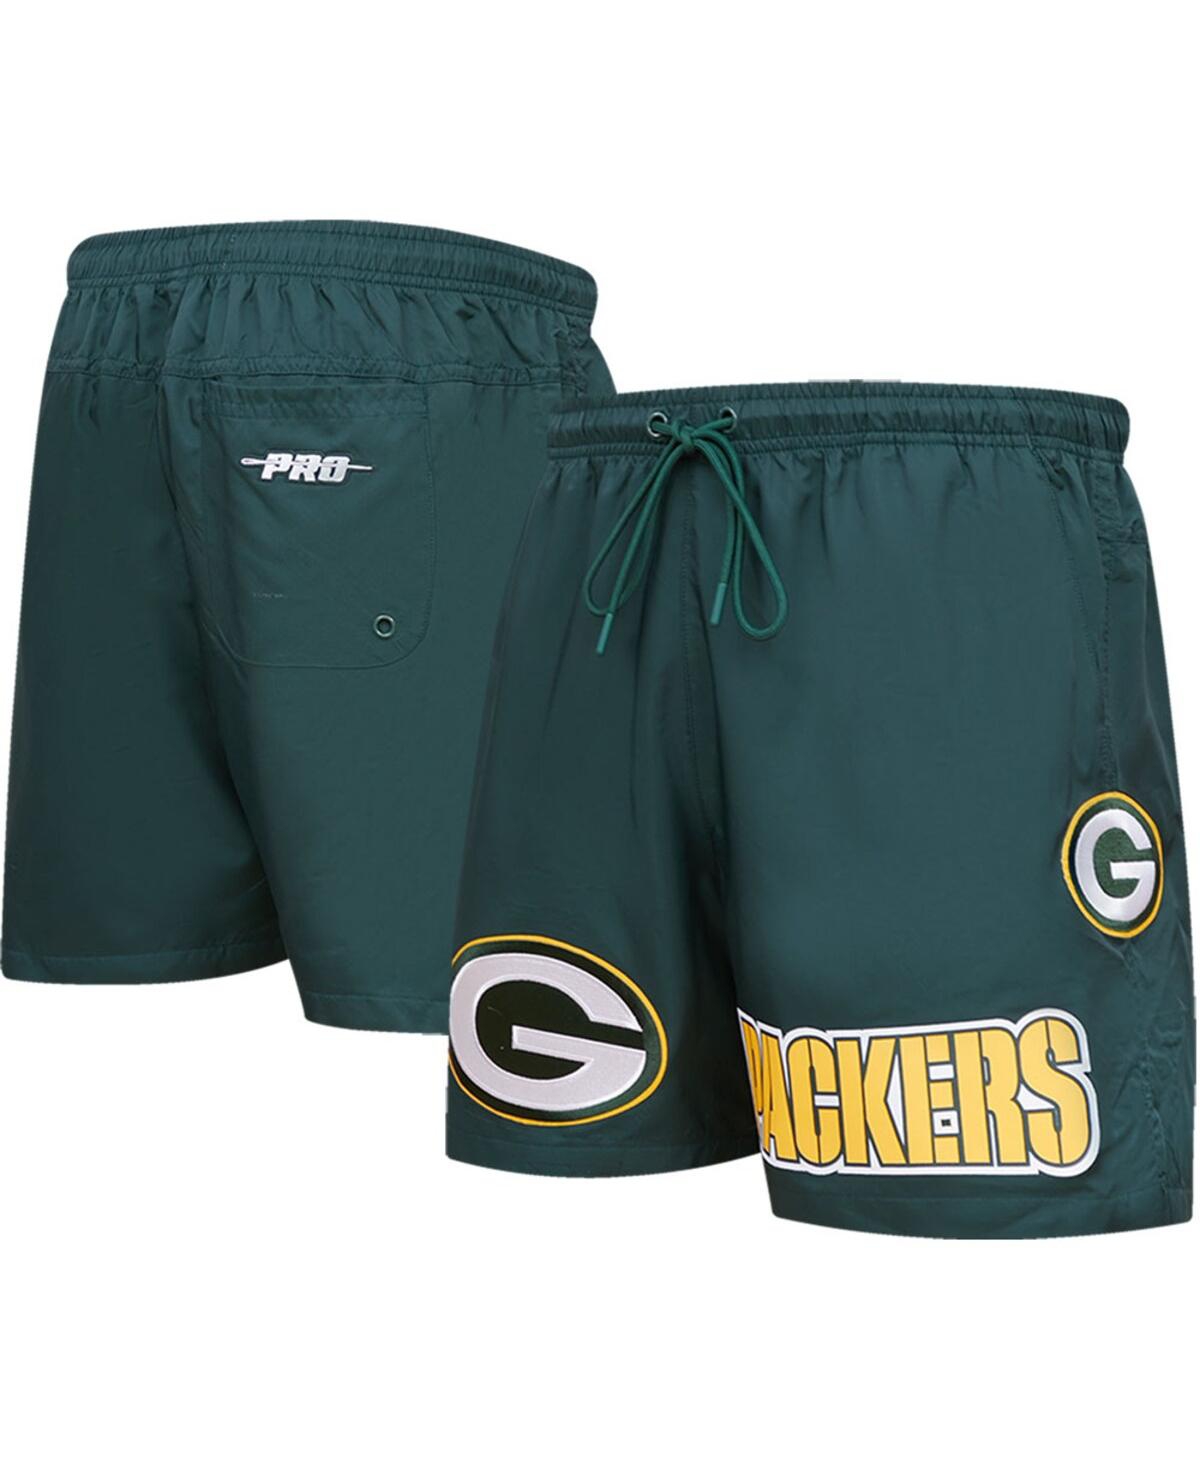 Shop Pro Standard Men's  Green Green Bay Packers Woven Shorts